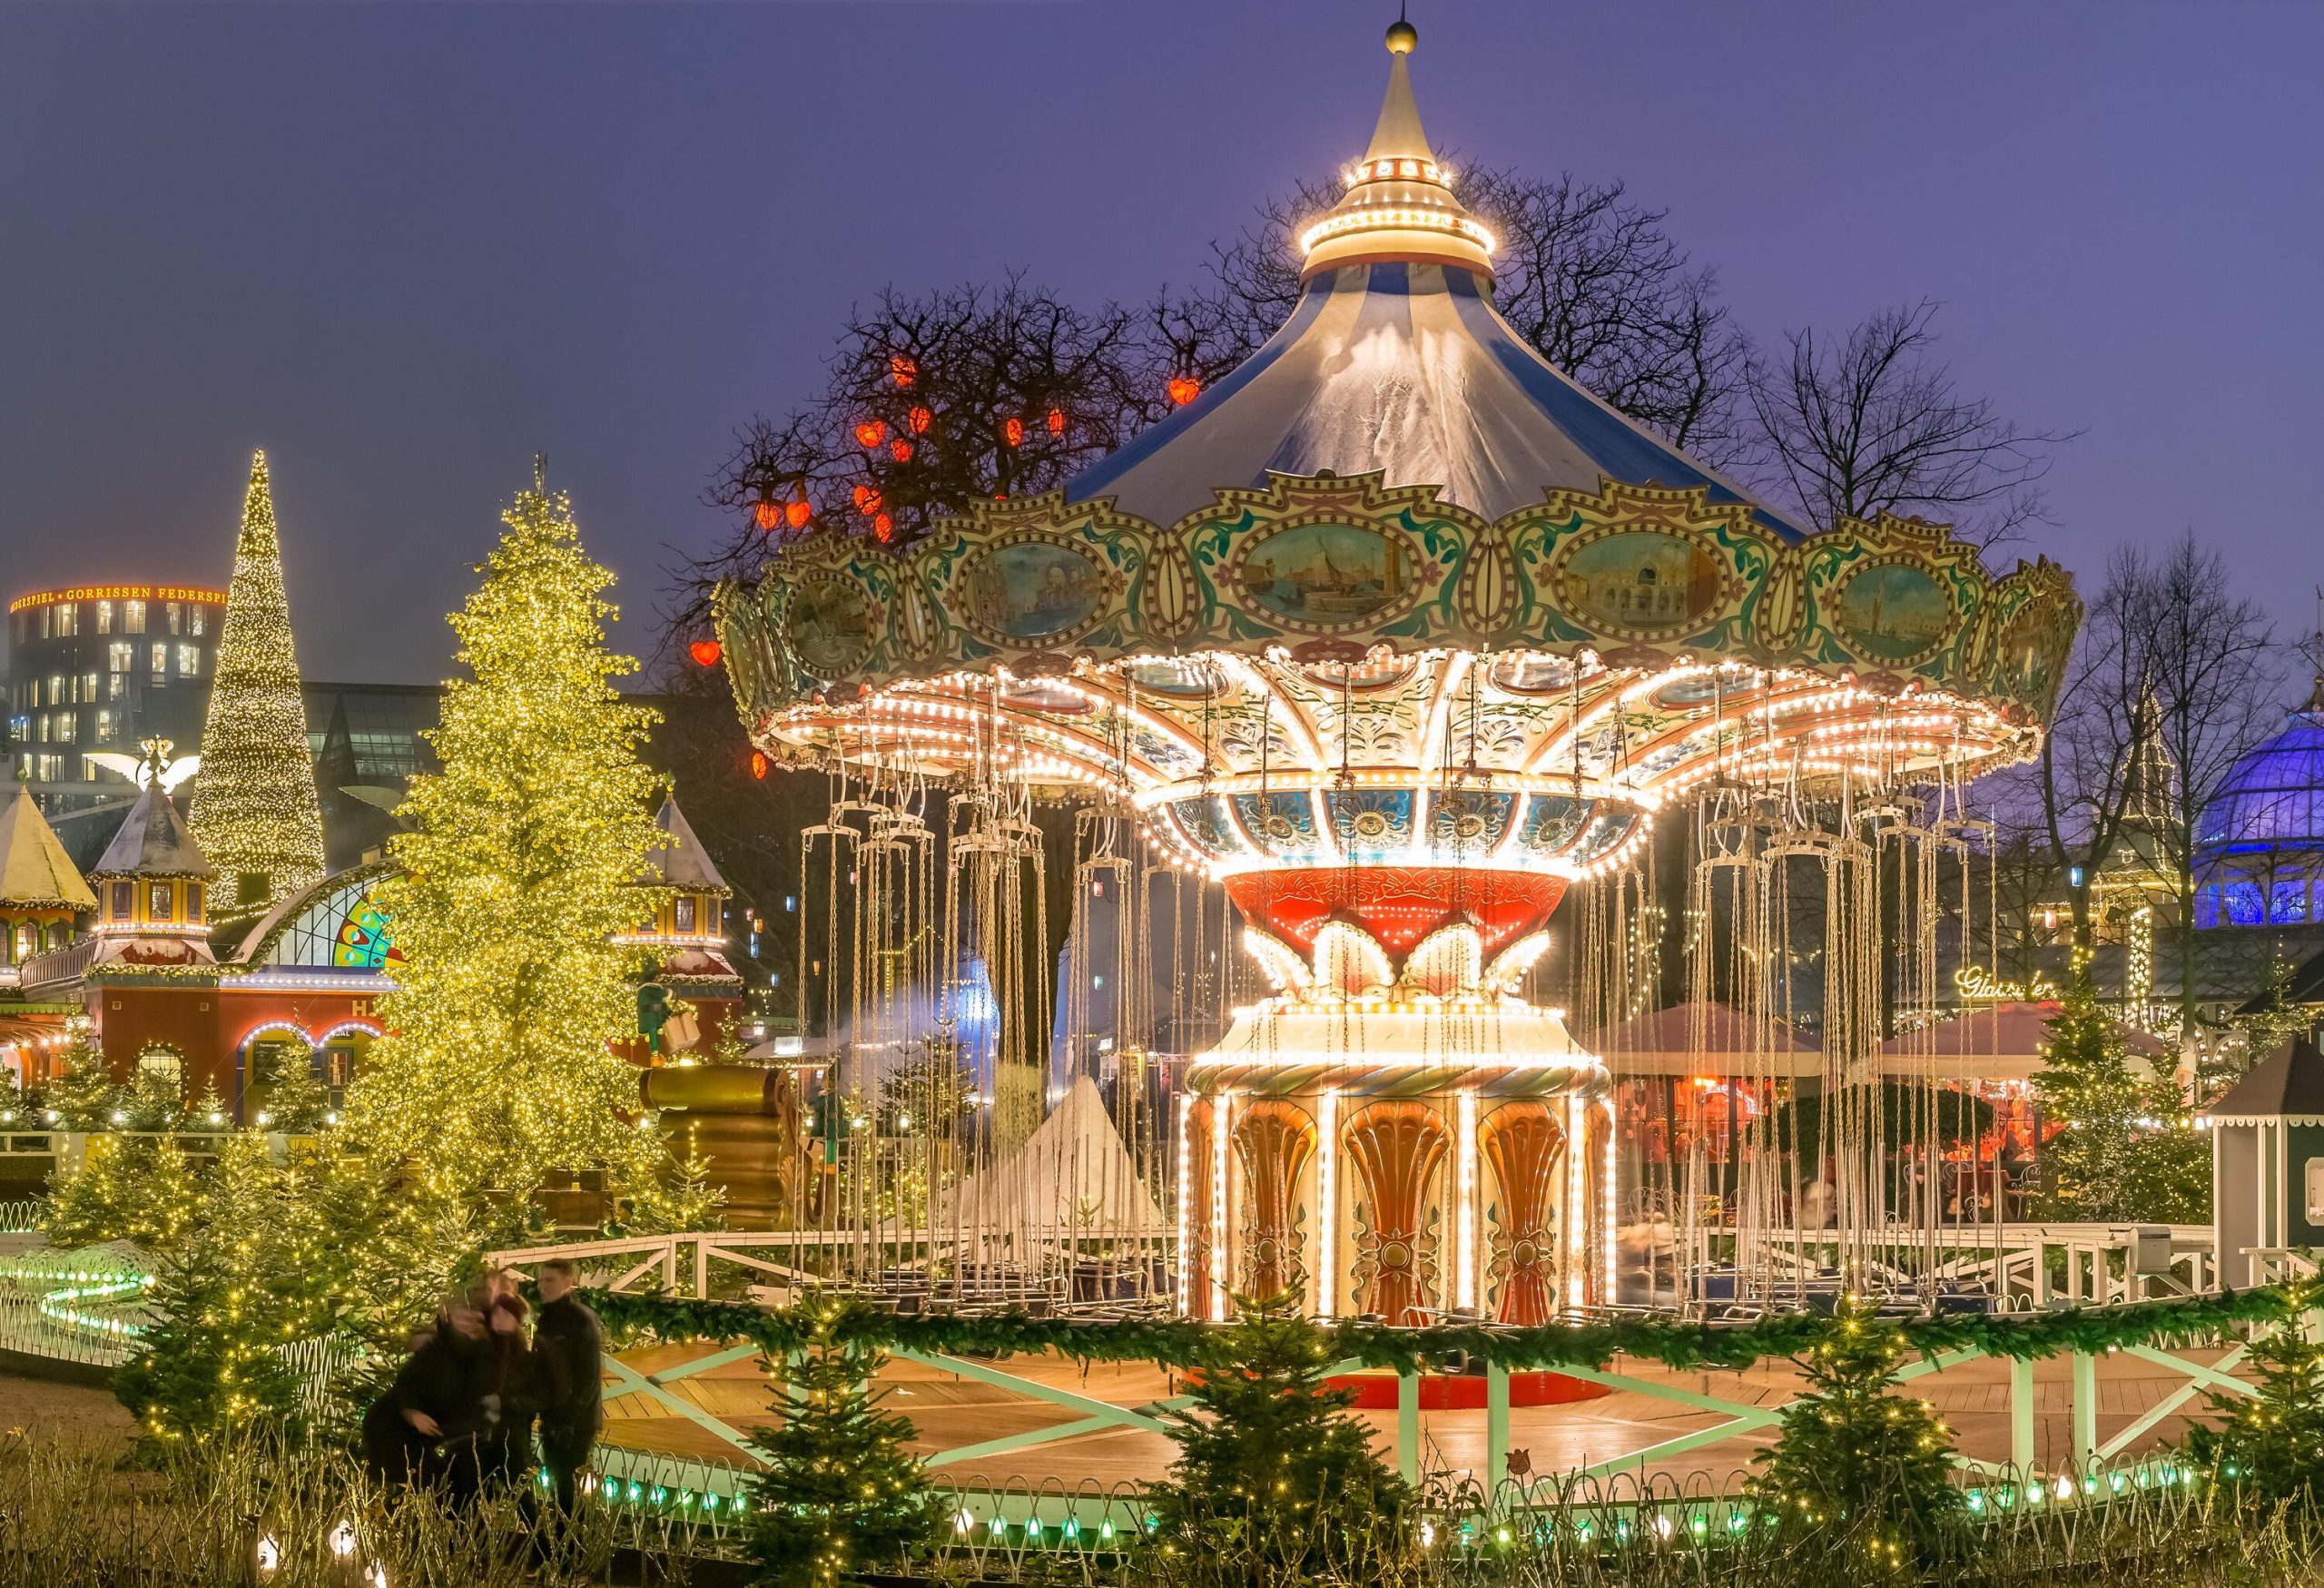 Magical light displays at an amusement park featuring a carousel and surrounding trees illuminated at night.